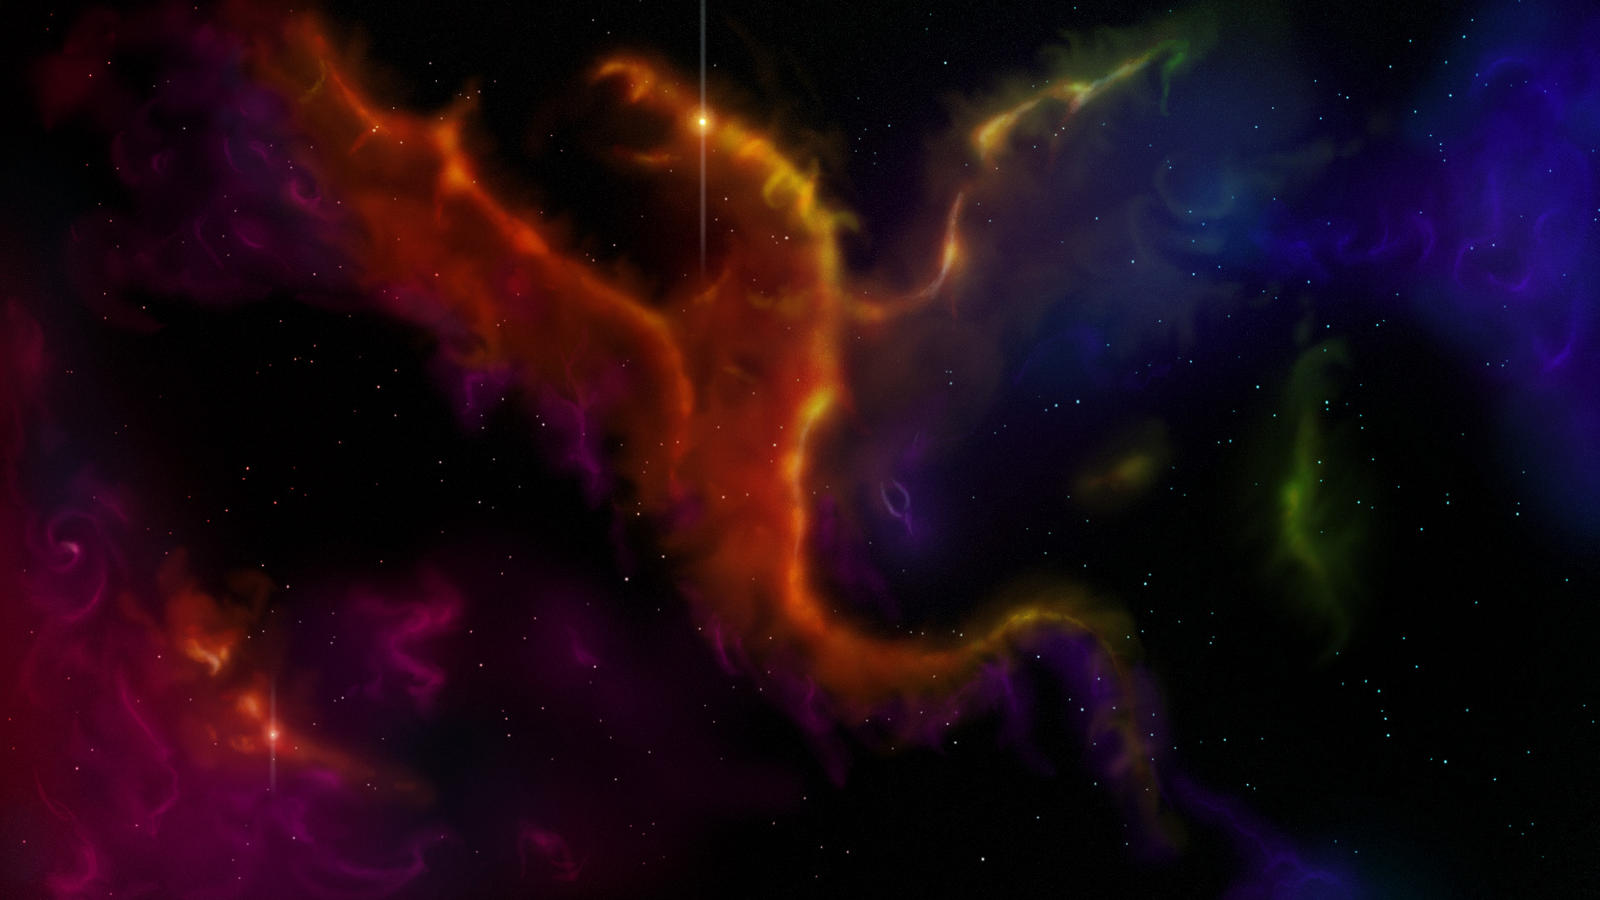 7. Heaven - Nebula